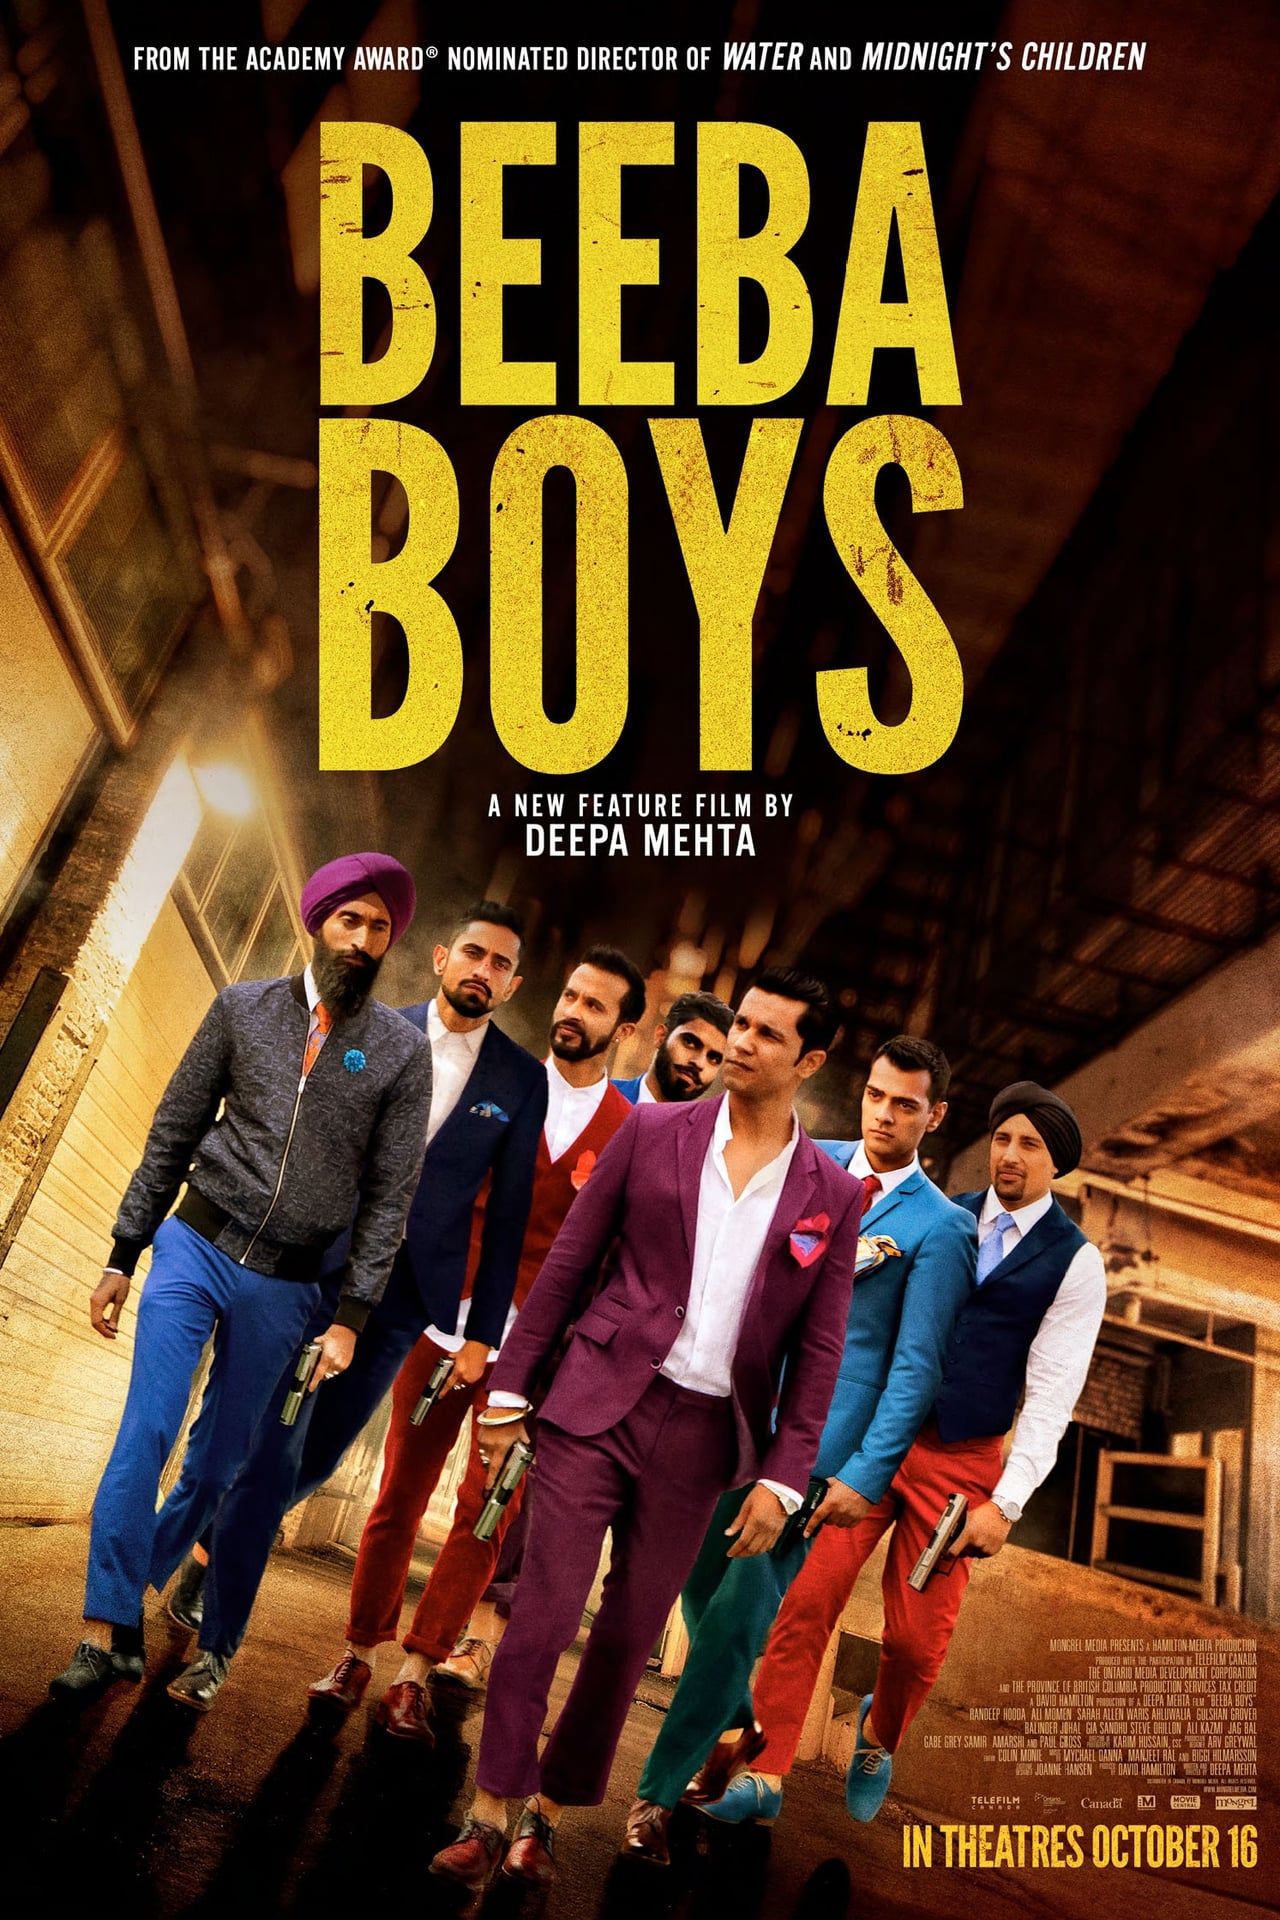 Beeba Boys (2015) Hindi Dubbed Movie download full movie